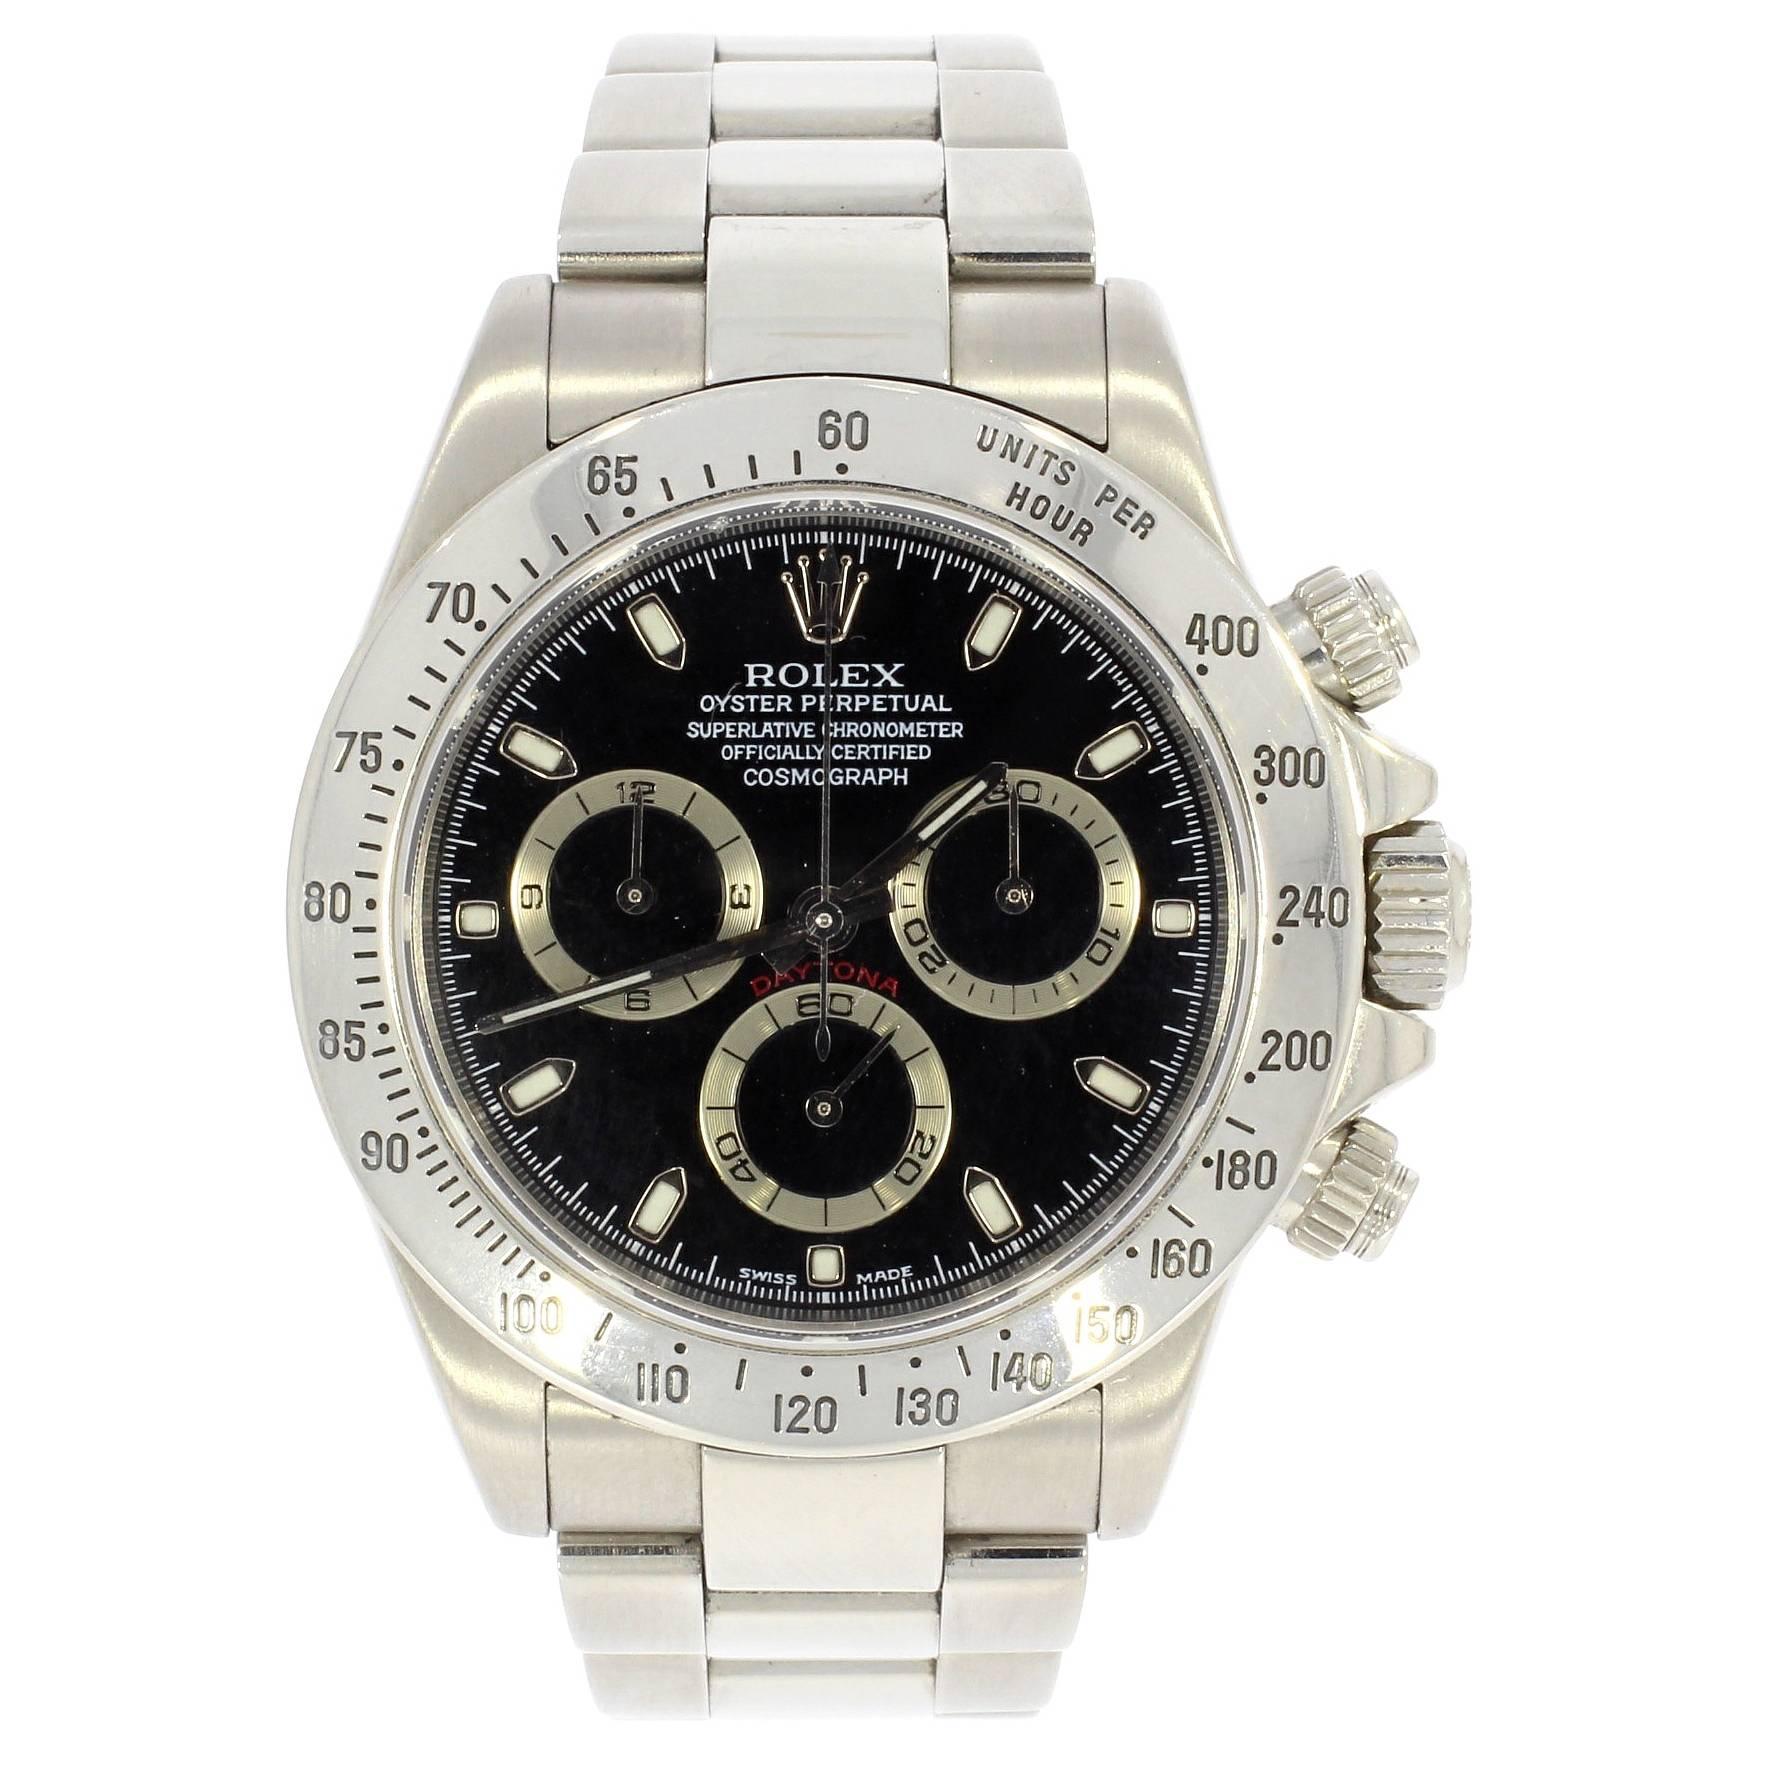 Rolex Daytona Stainless Steel Chronograph 116520 Automatic Wrist Watch